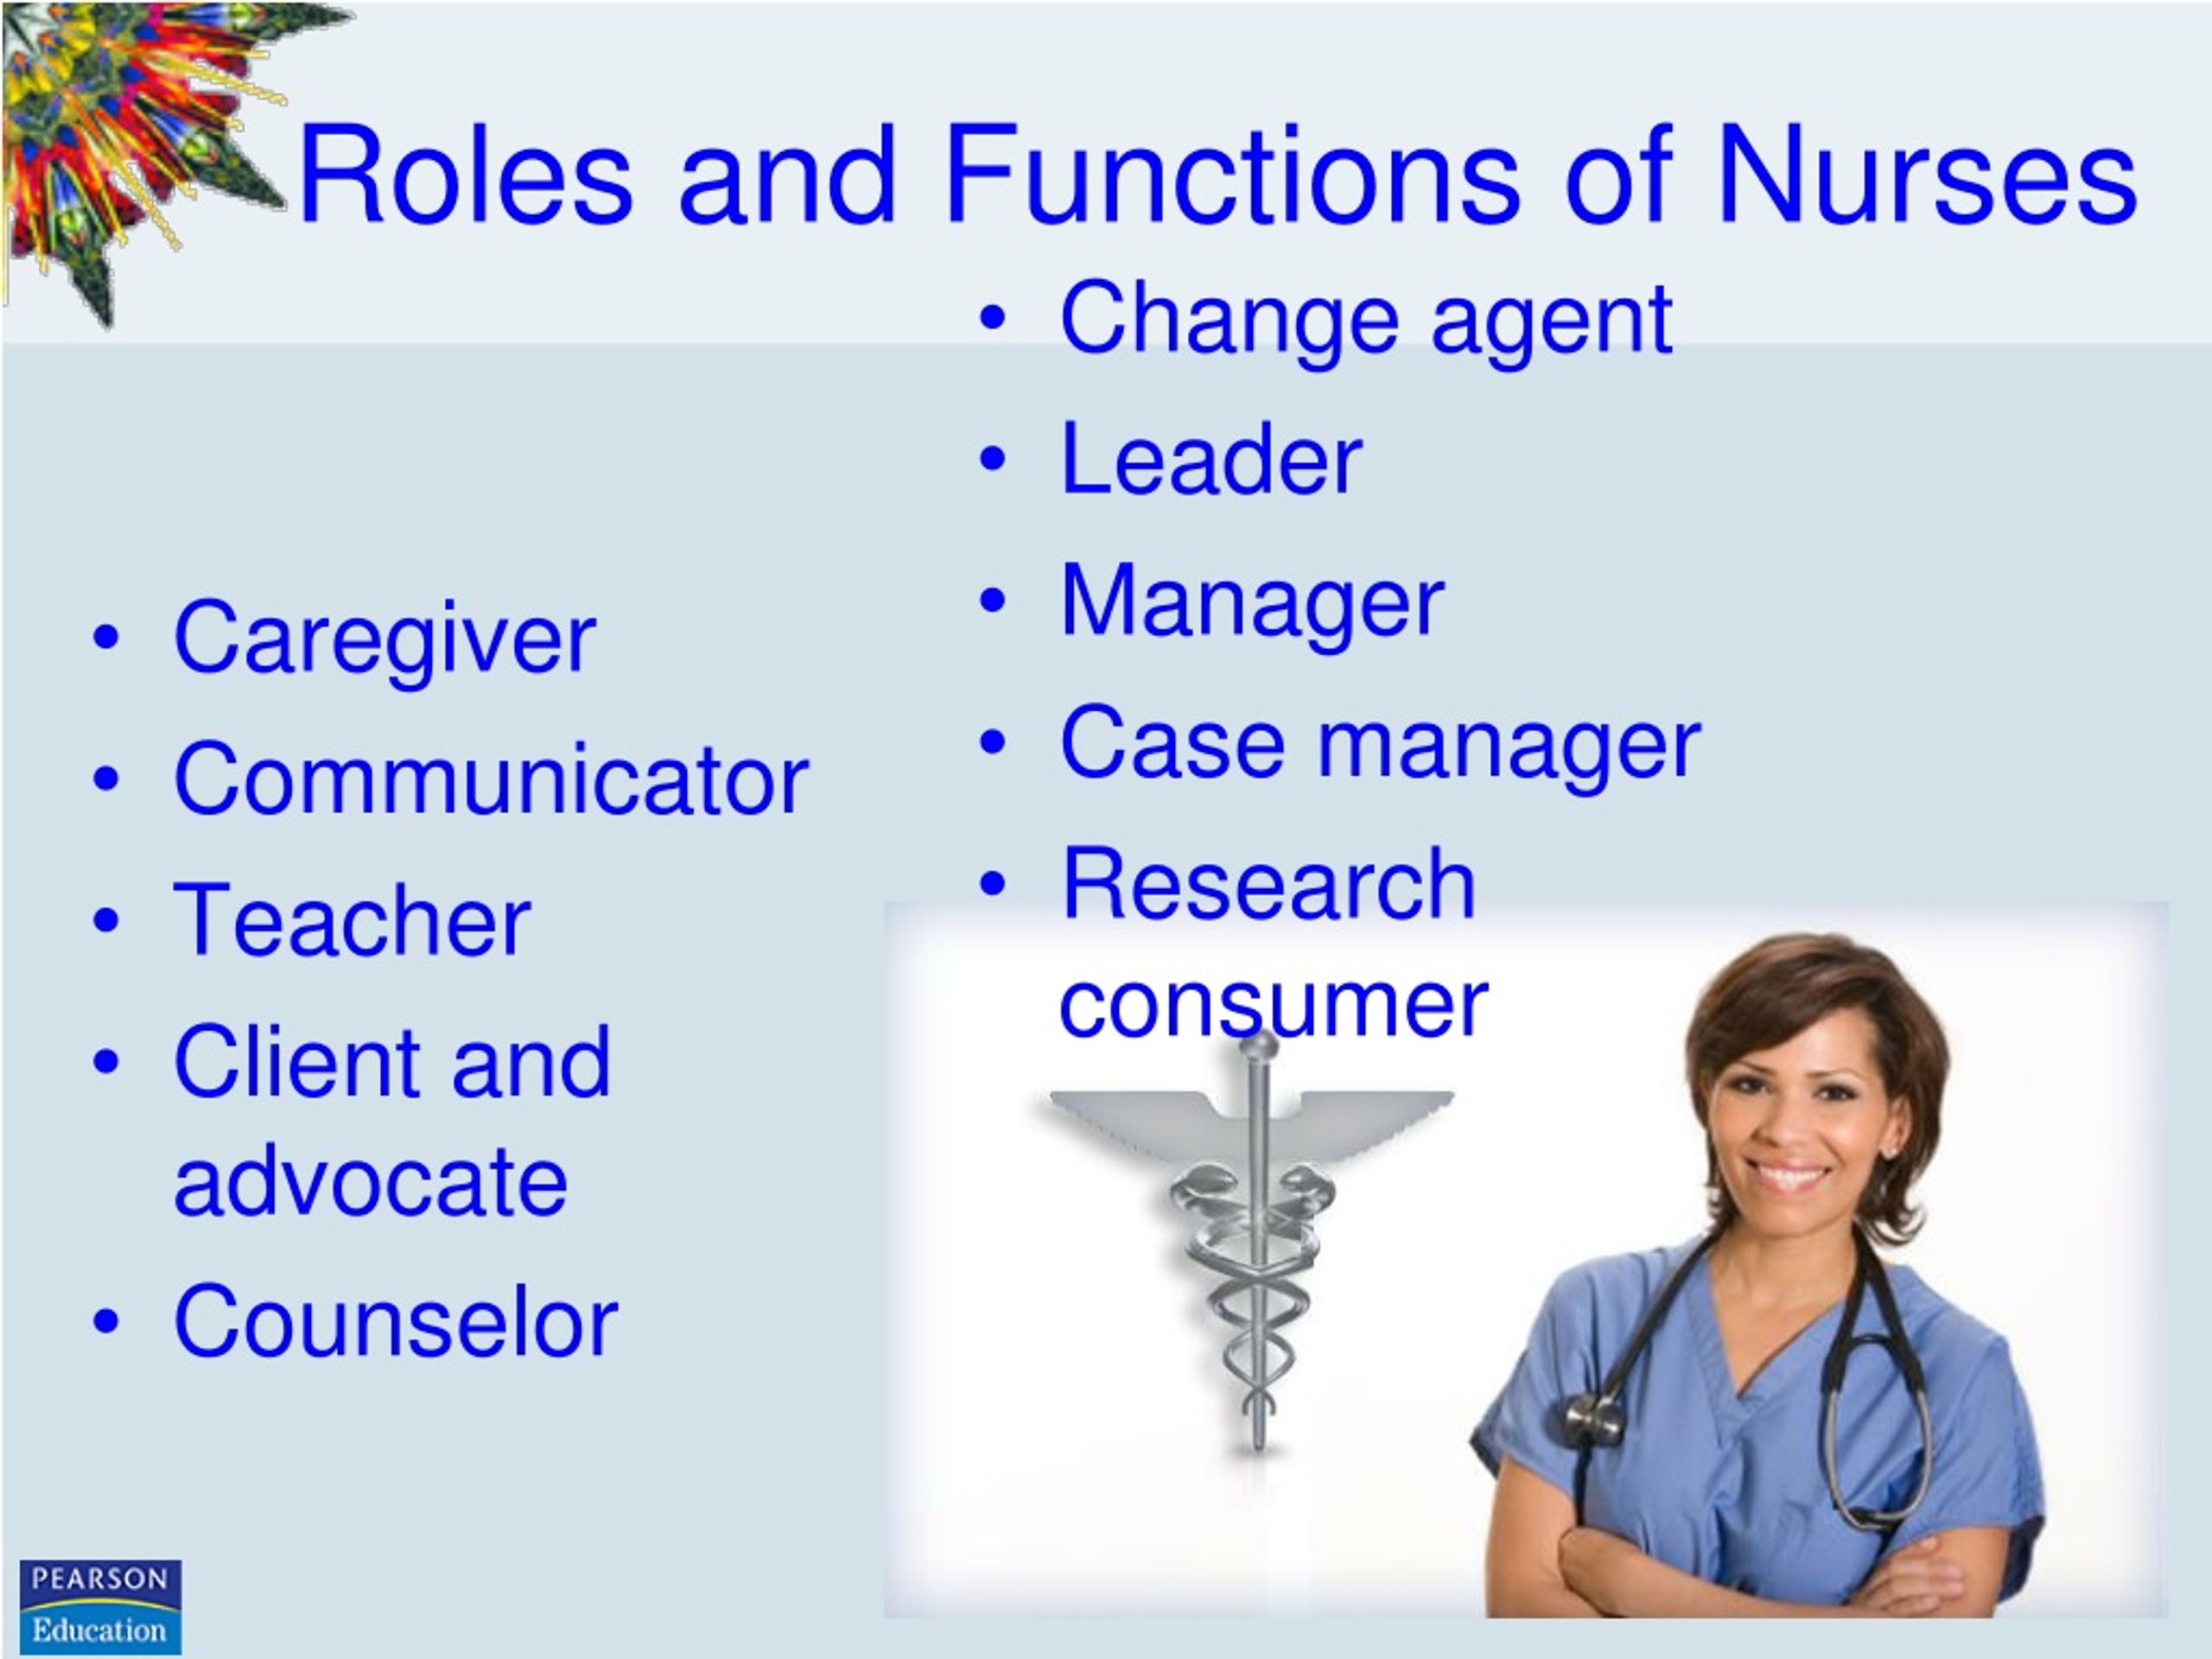 role of the research nurse presentation